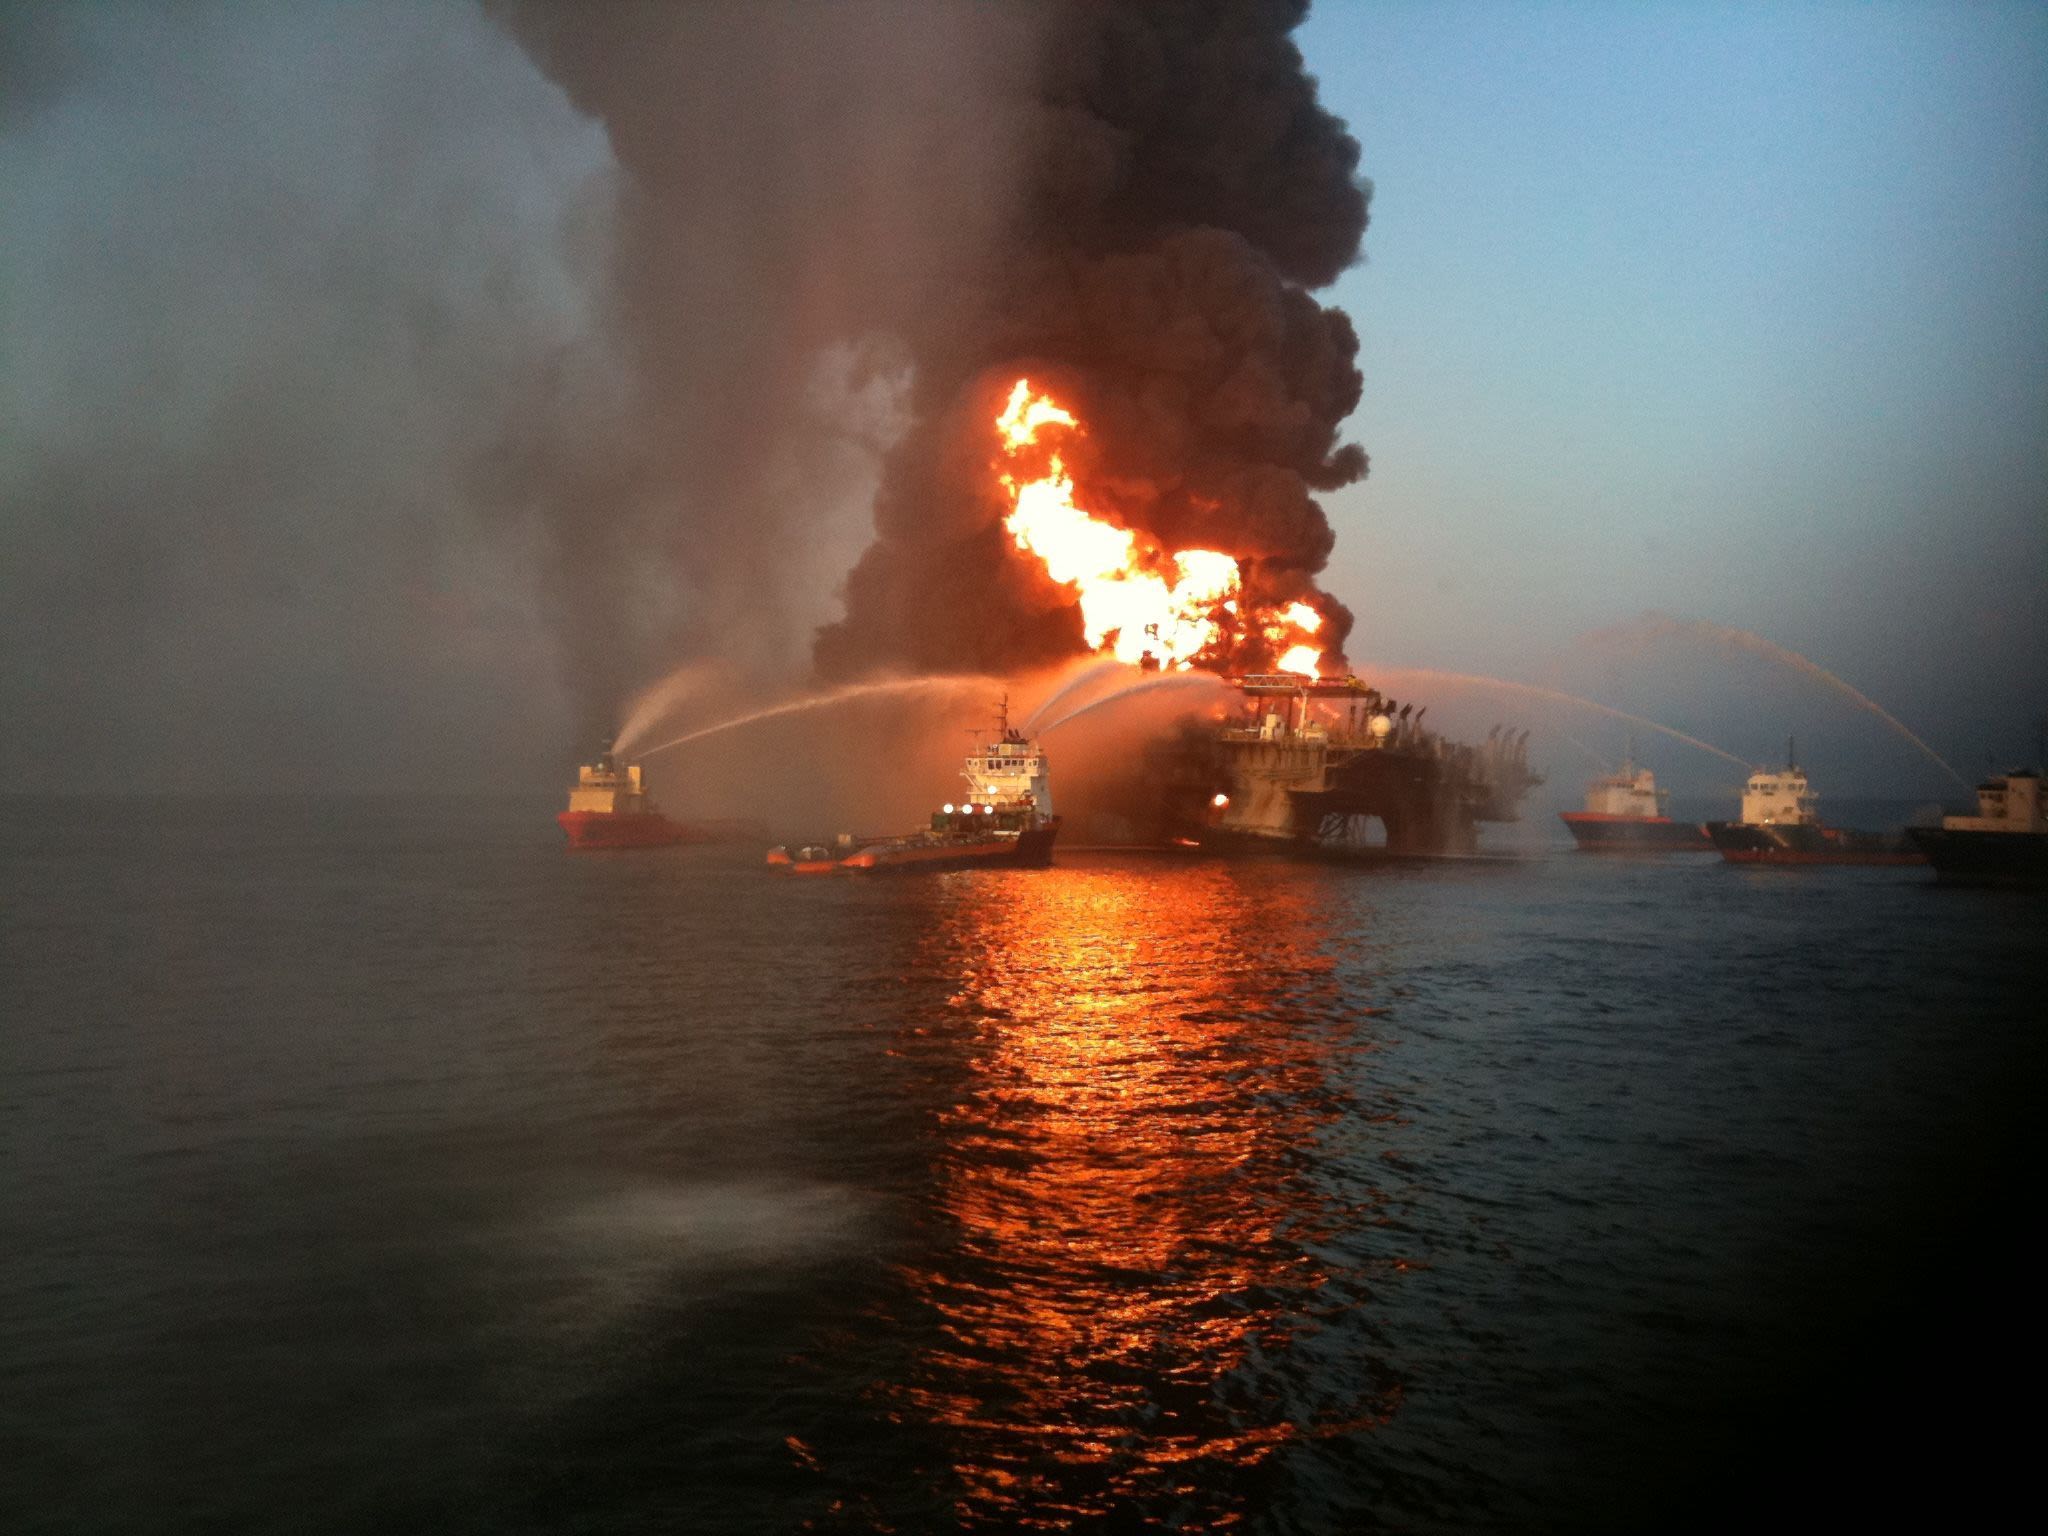 Remembering the night Deepwater Horizon caught fire